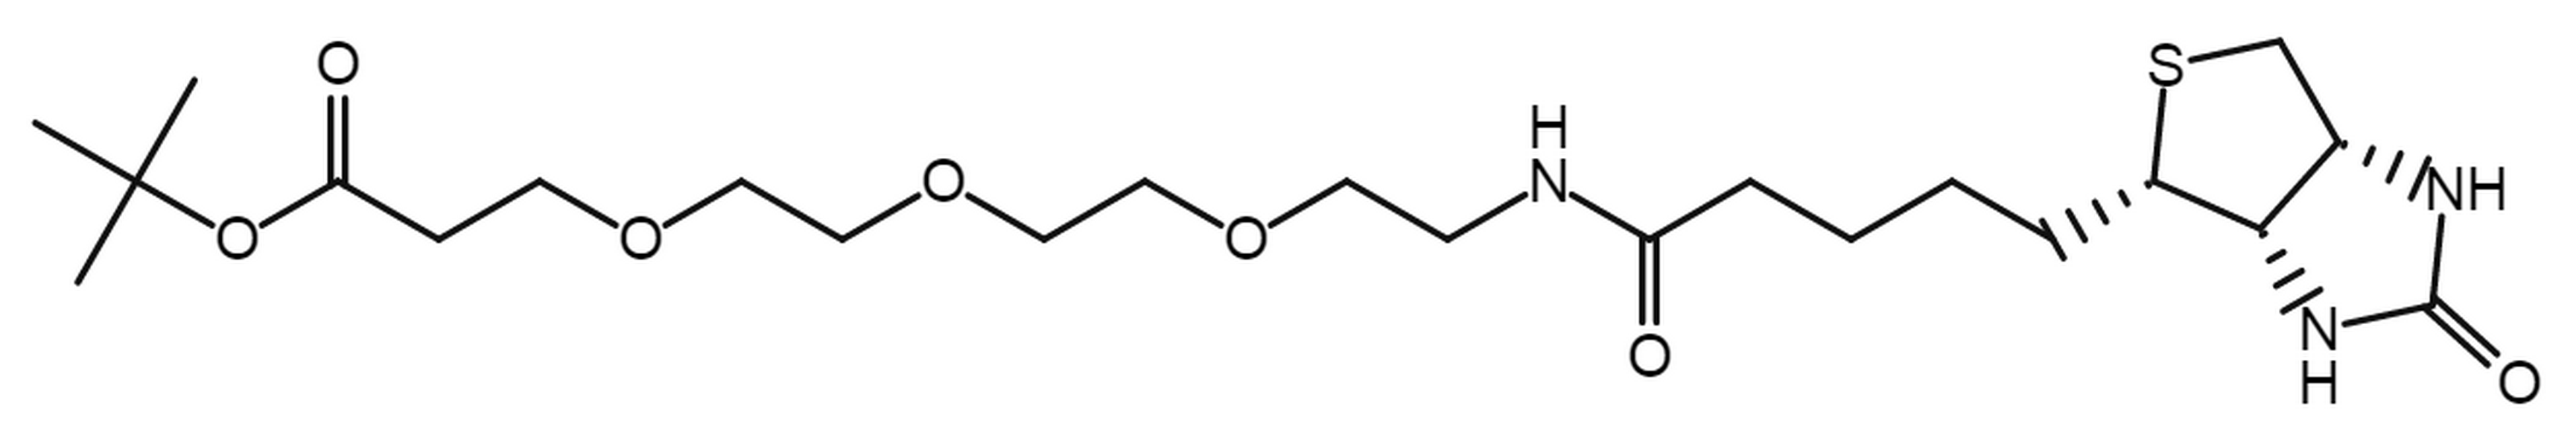 Biotin-PEG3-t-butyl ester